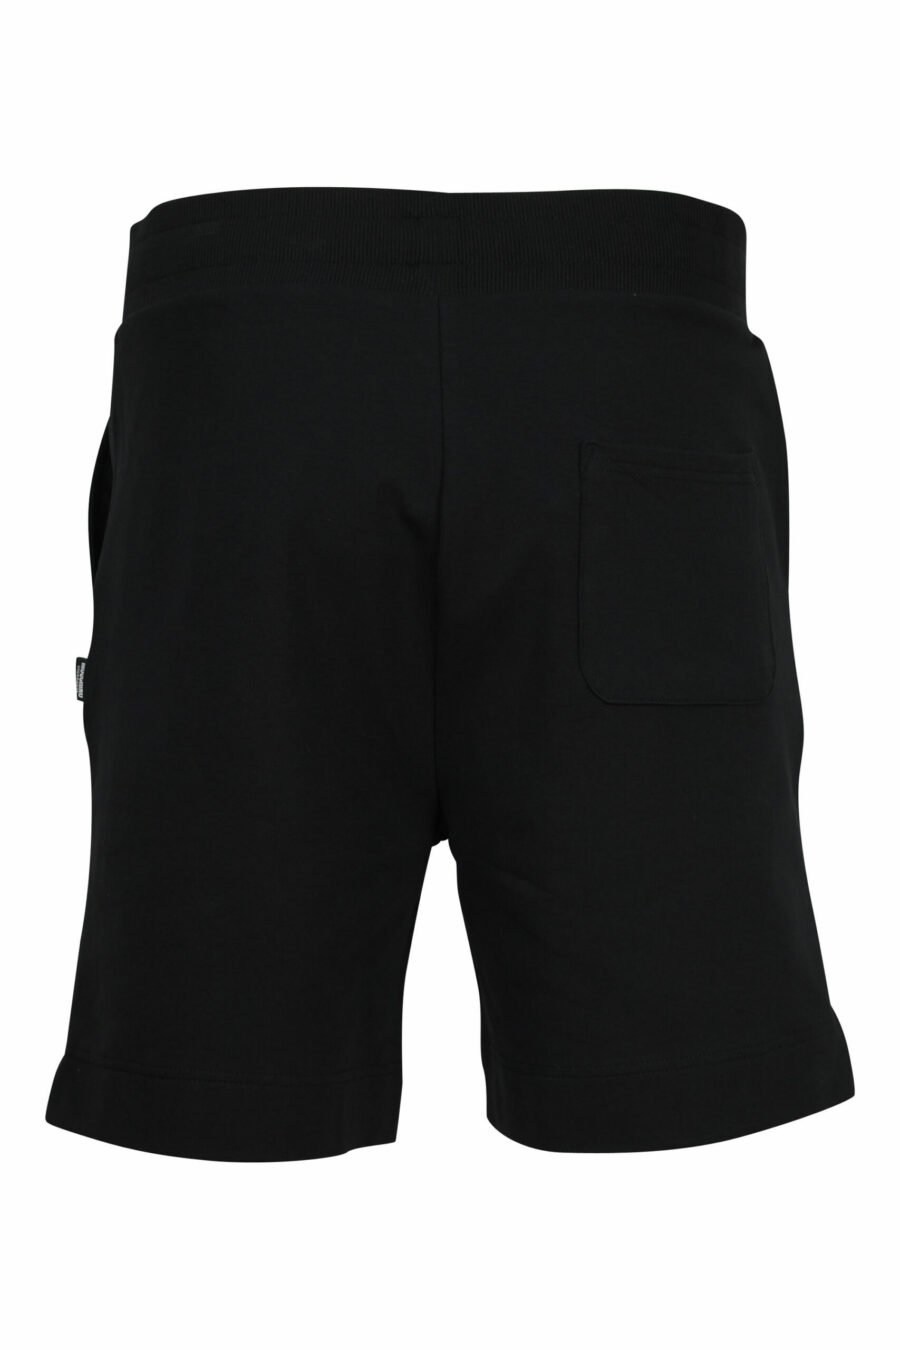 Trainingshose schwarz mit Mini-Logo Bär "underbear" in schwarzem Gummi - 667113622200 1 skaliert